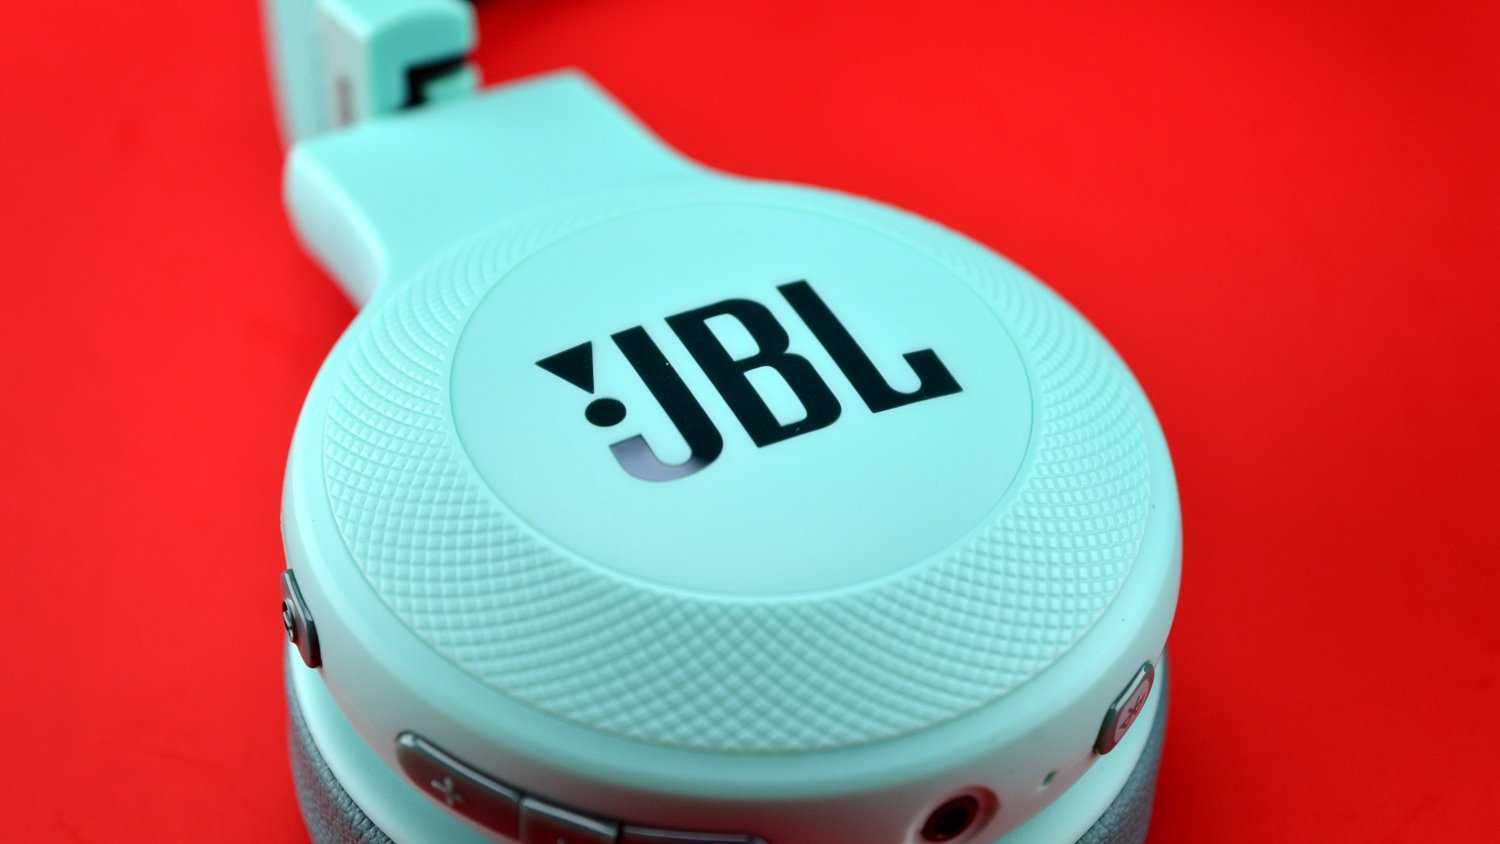 Jbl страна производитель. Наушники JBL E-Series беспроводные. Наушники JBL bt50. JBL 360 BT. JBL c45bt оригинал.